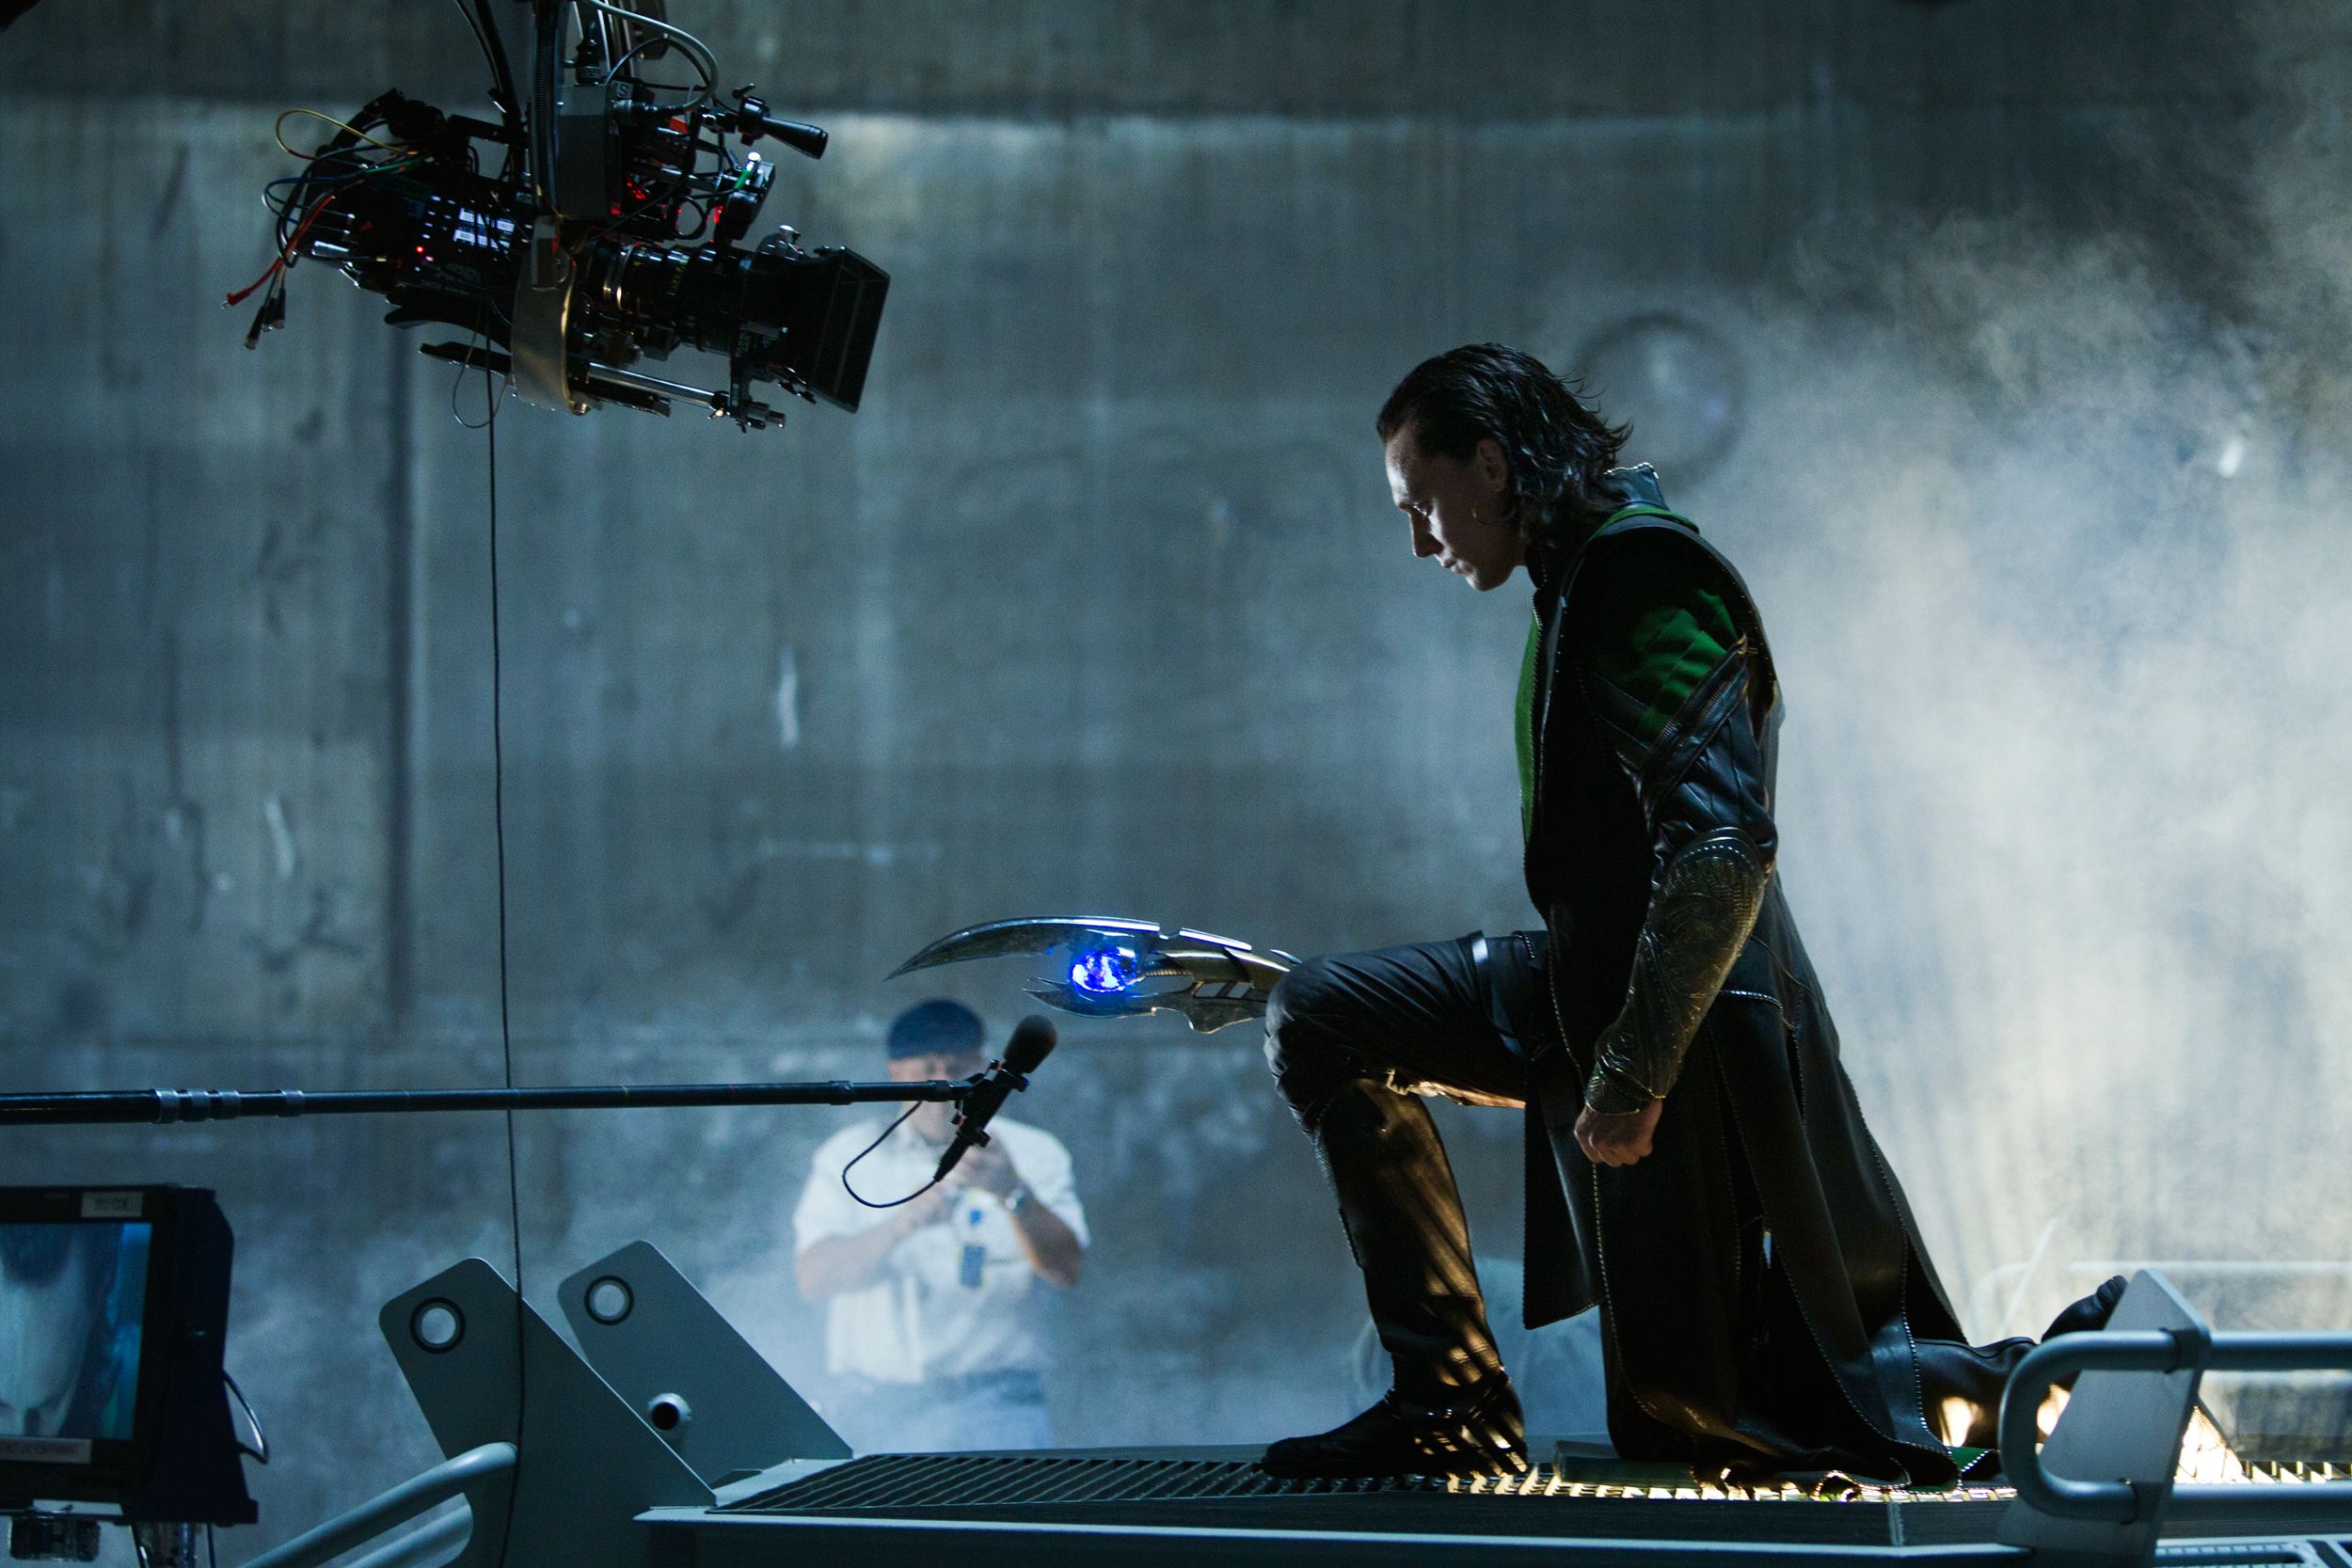 Tom-Hiddleston-Loki-The-Avengers-movie-image